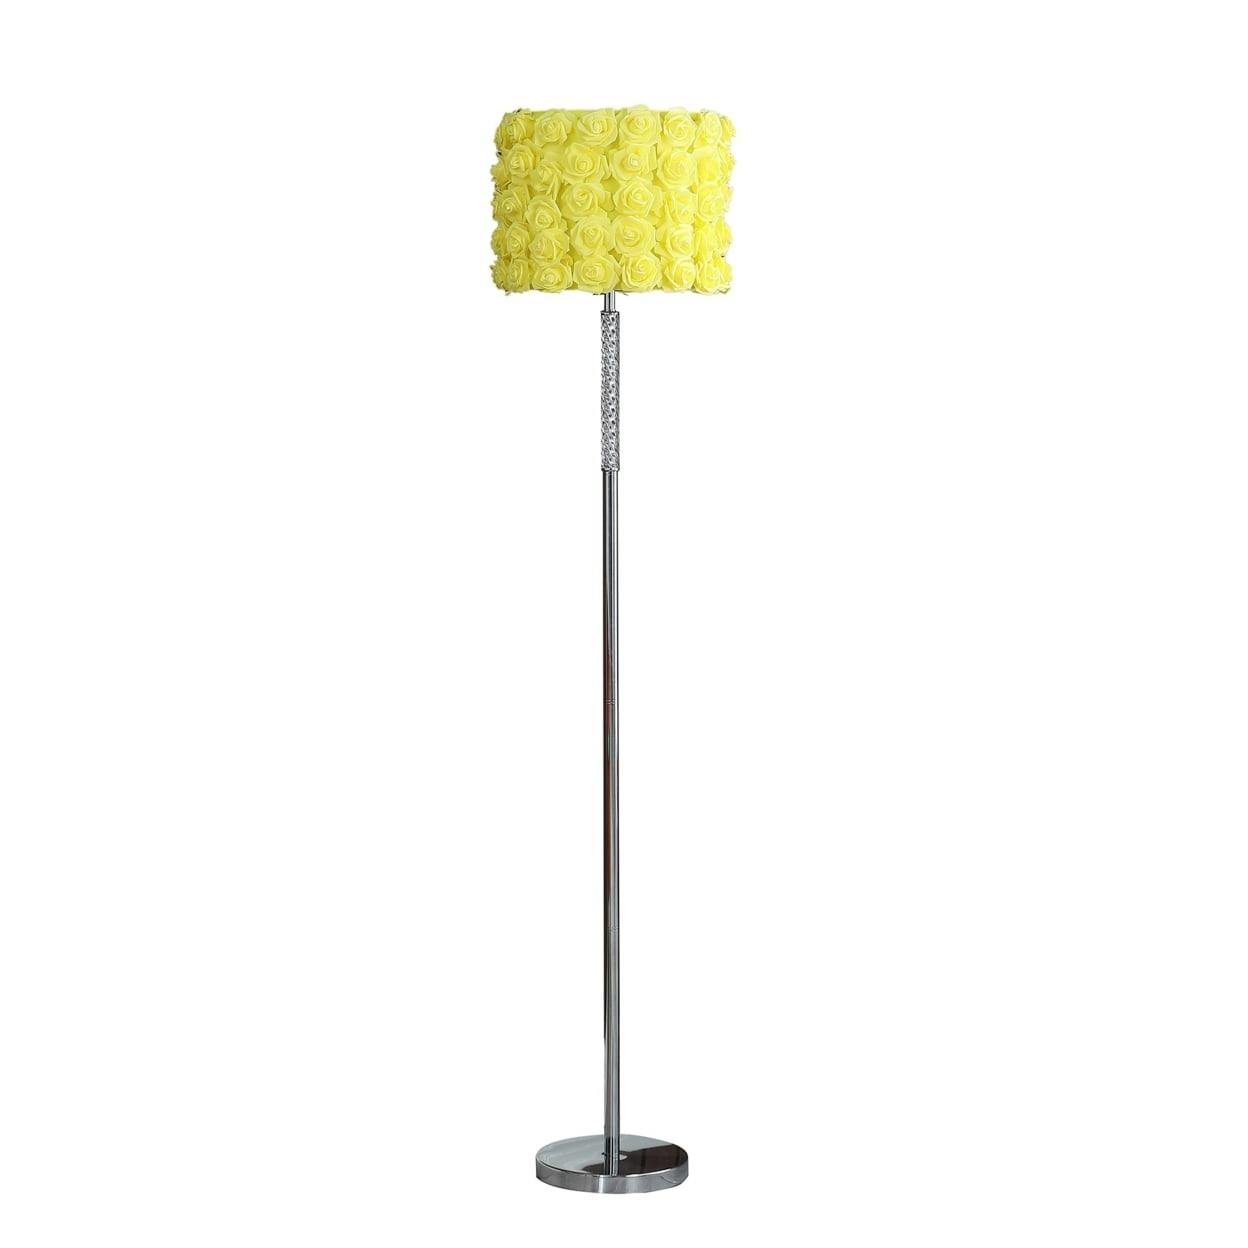 Finn 63" Adjustable Glamorous Floor Lamp with Yellow Silk Roses